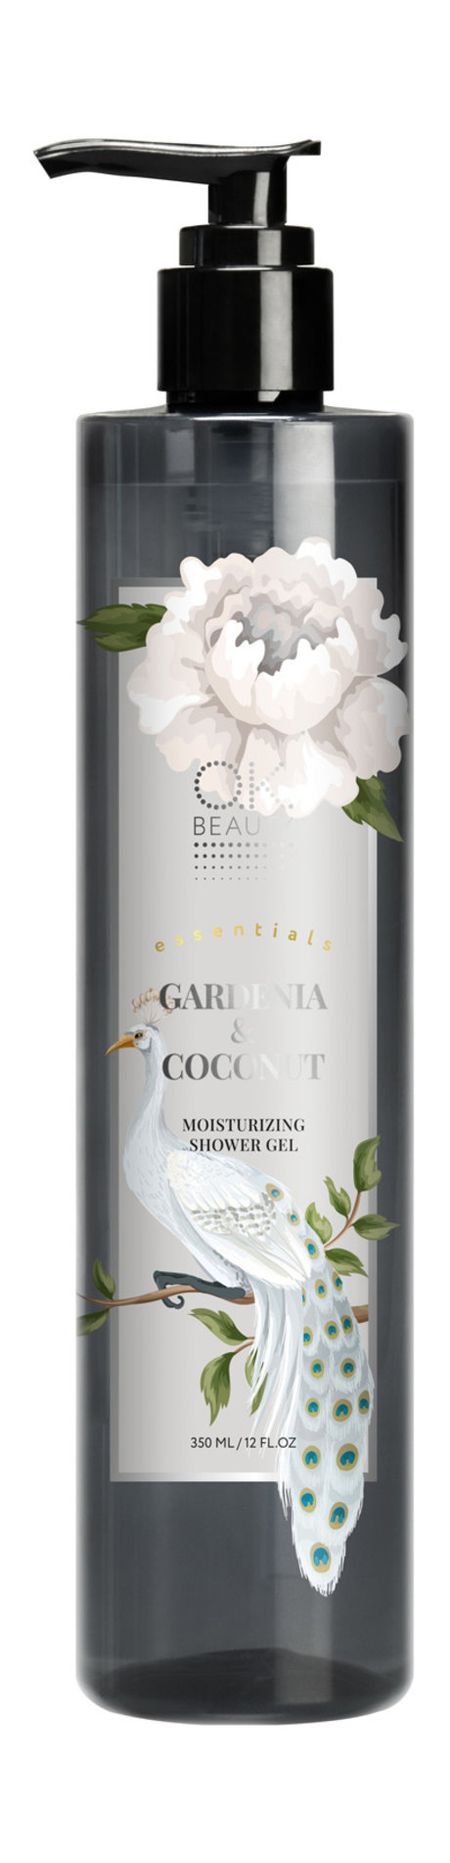 o.k.beauty essentials gardenia&coconut moisturizing shower gel